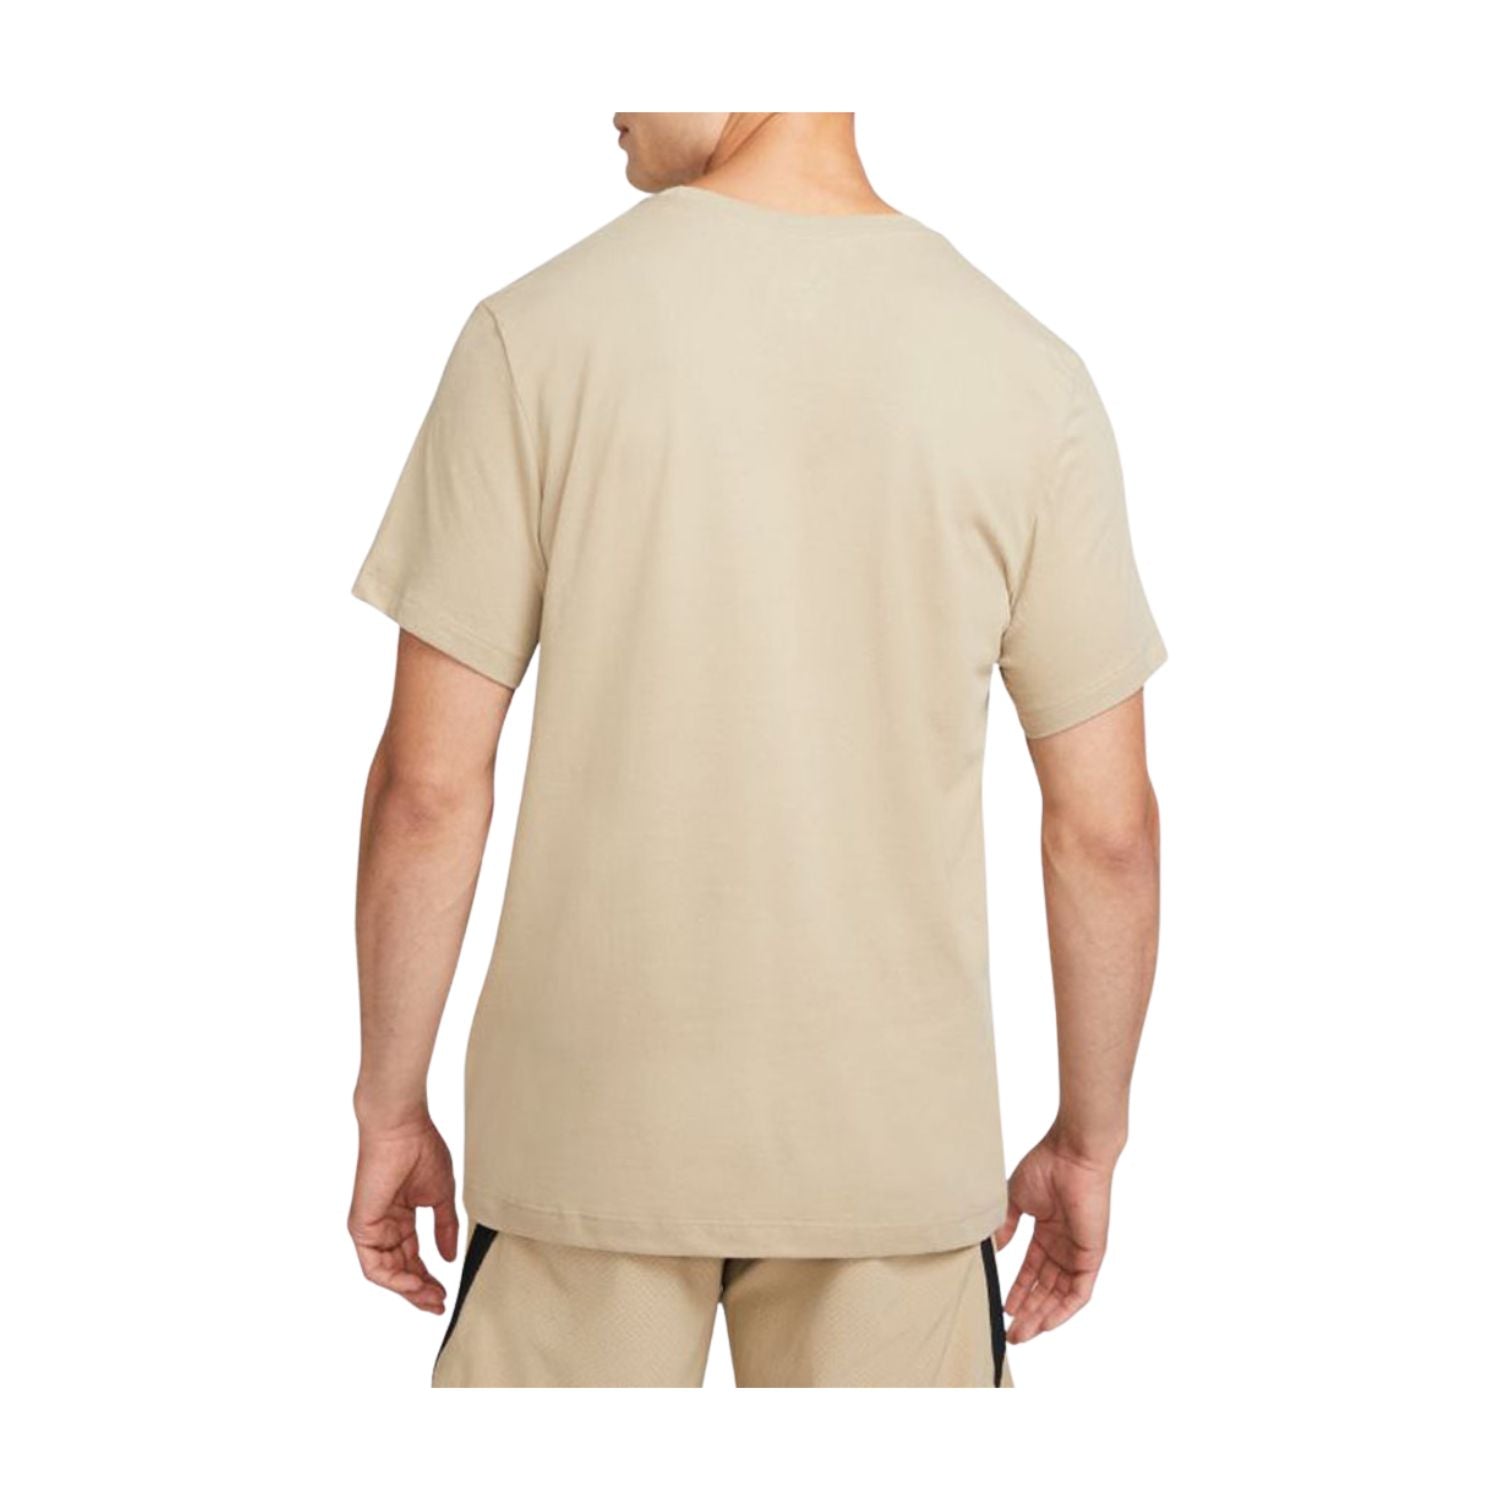 Nike Dri-fit Swoosh Training T-shirt Mens Style : Cz9724